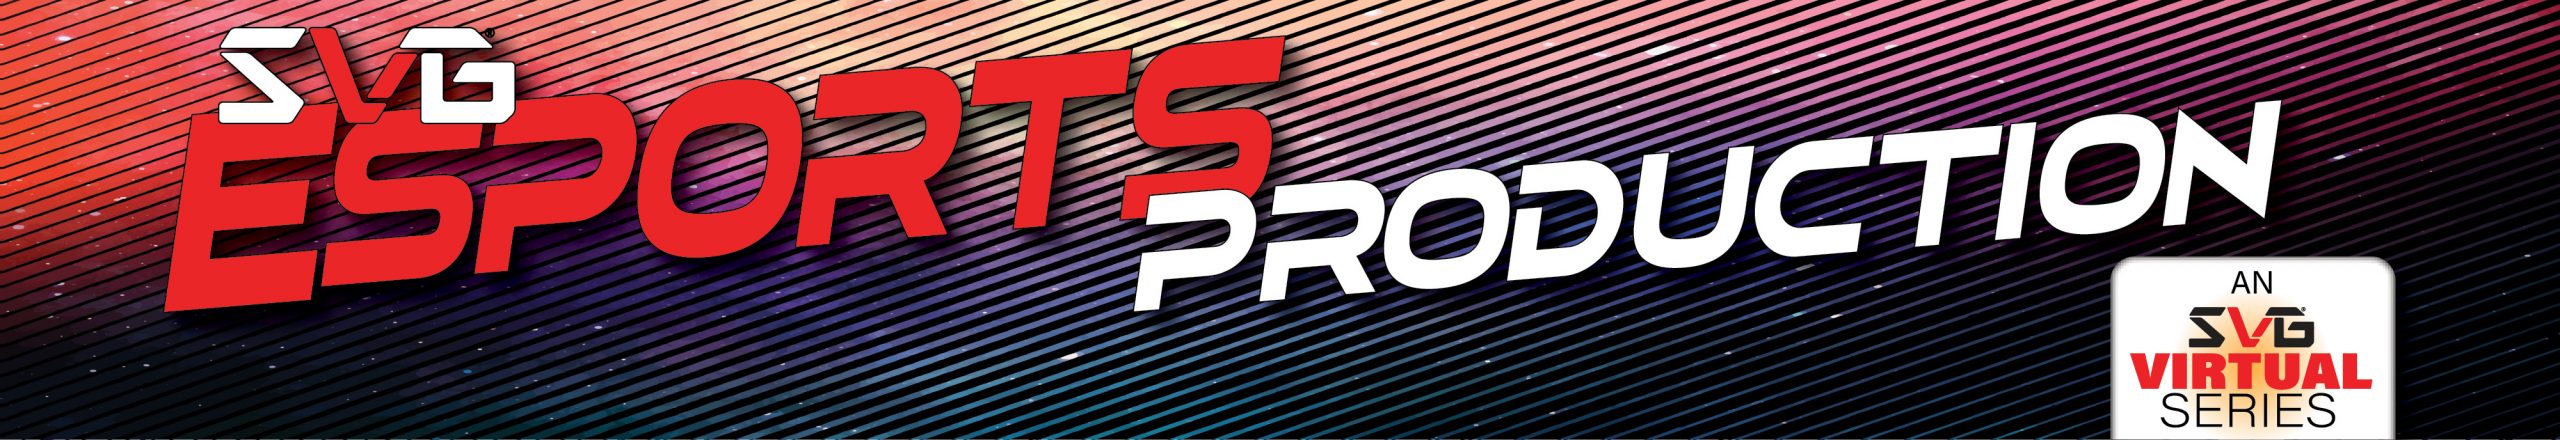 2020 SVG Esports Production Virtual Series